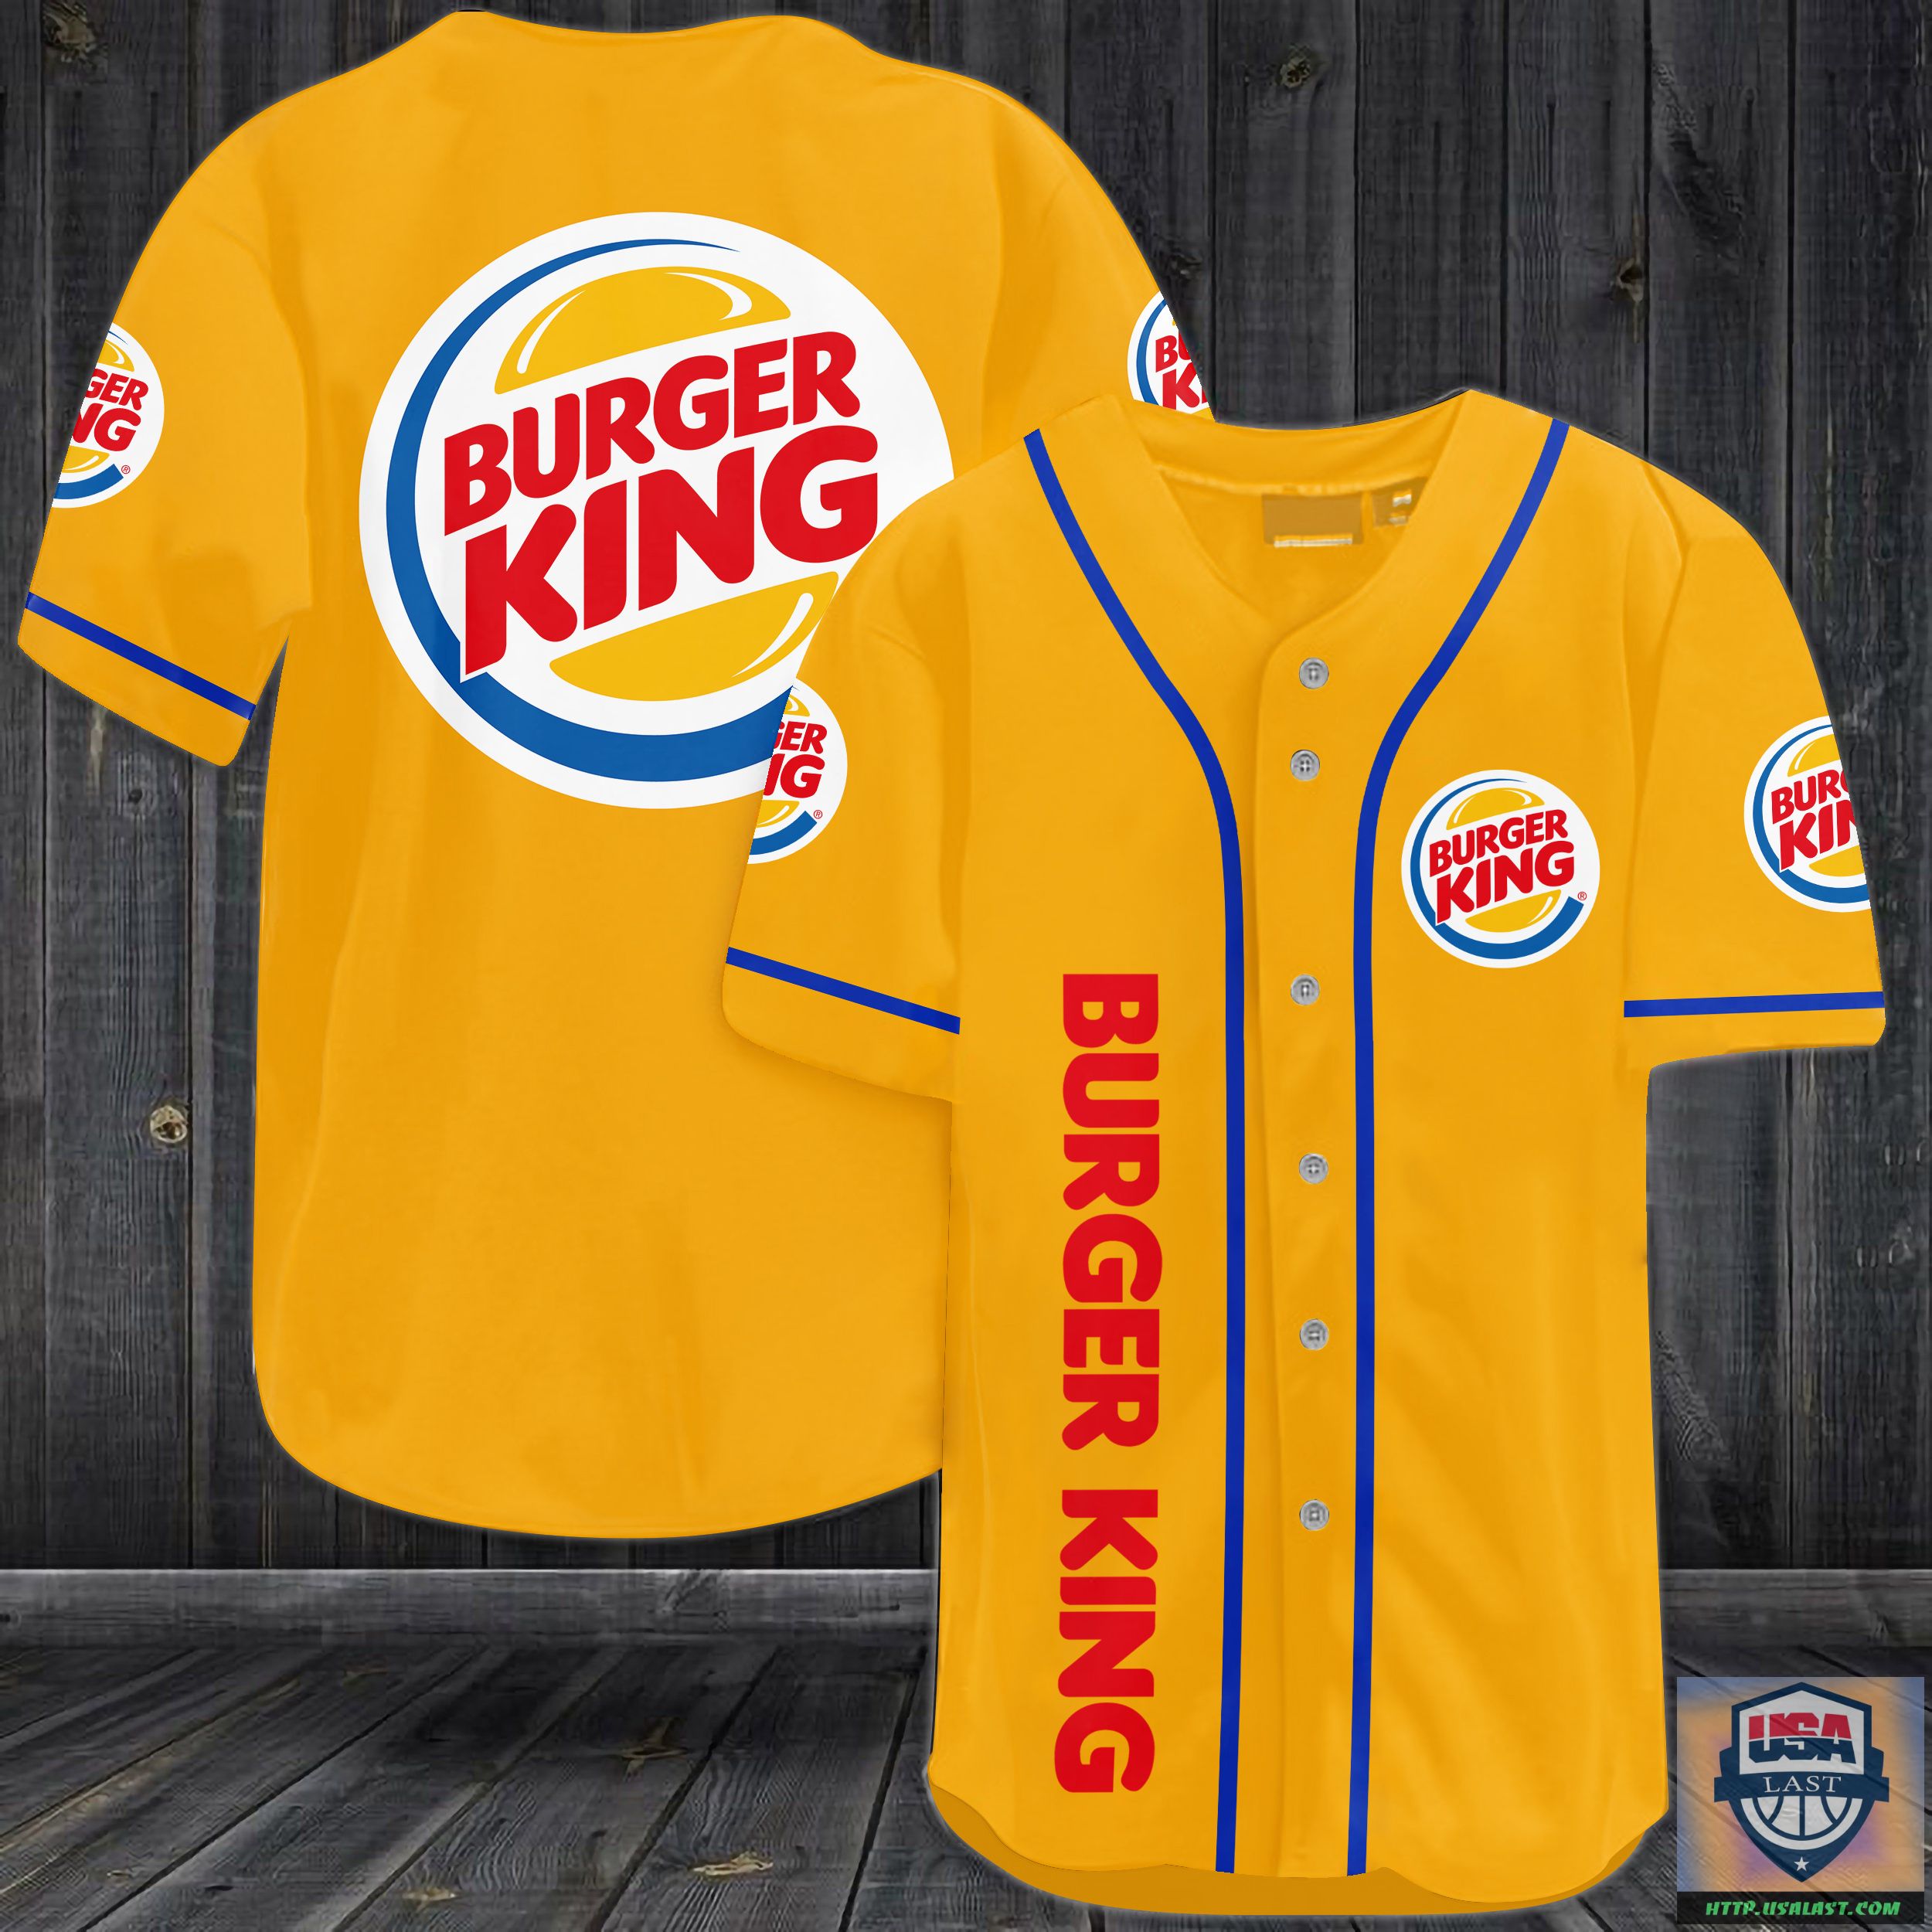 Burger King Baseball Jersey Shirt – Usalast